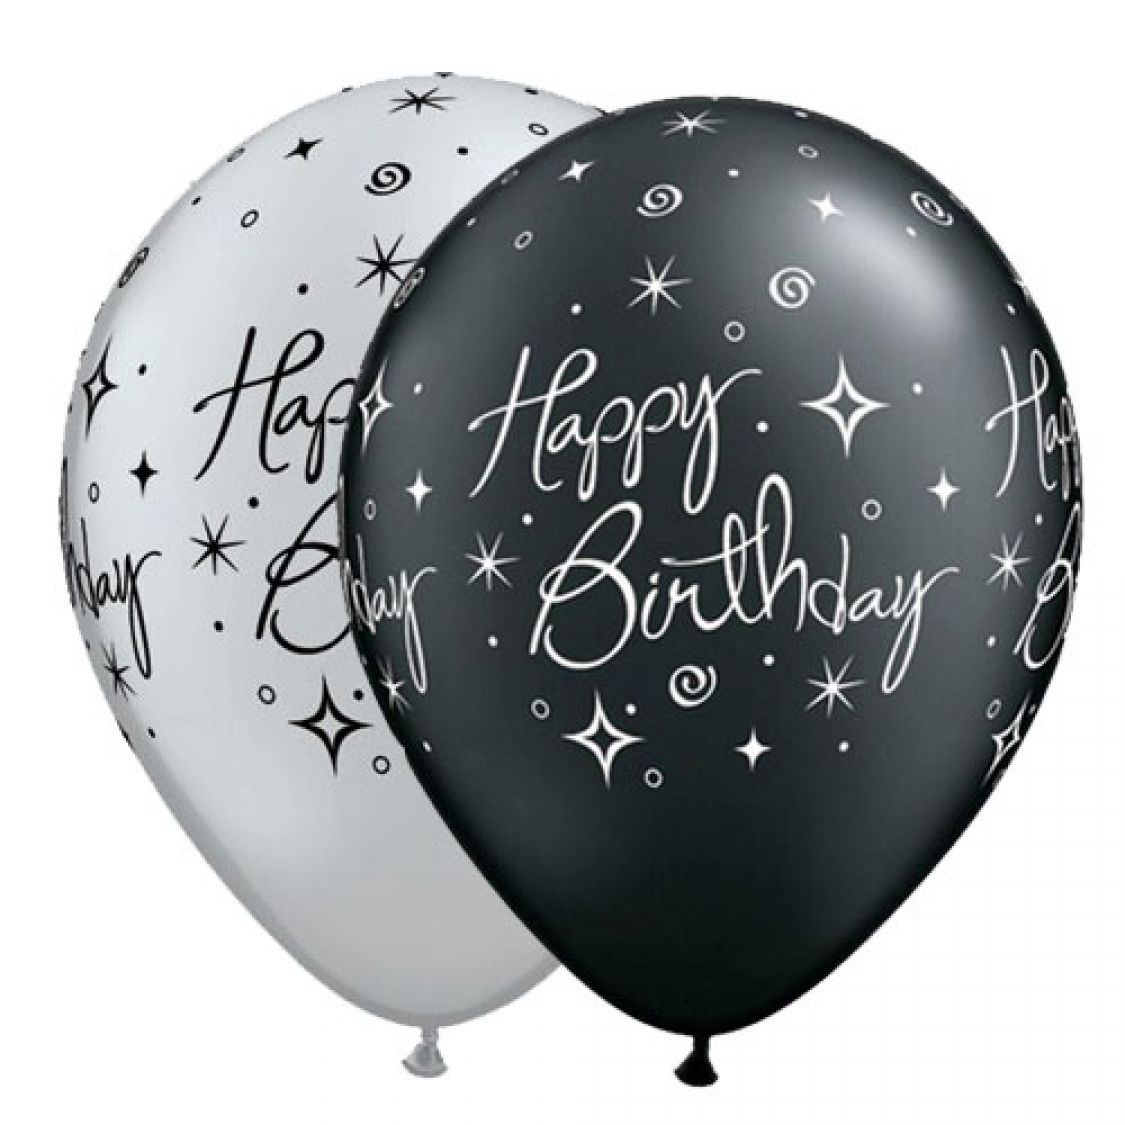 Ballon Happy Birthday qualatex noir et argent